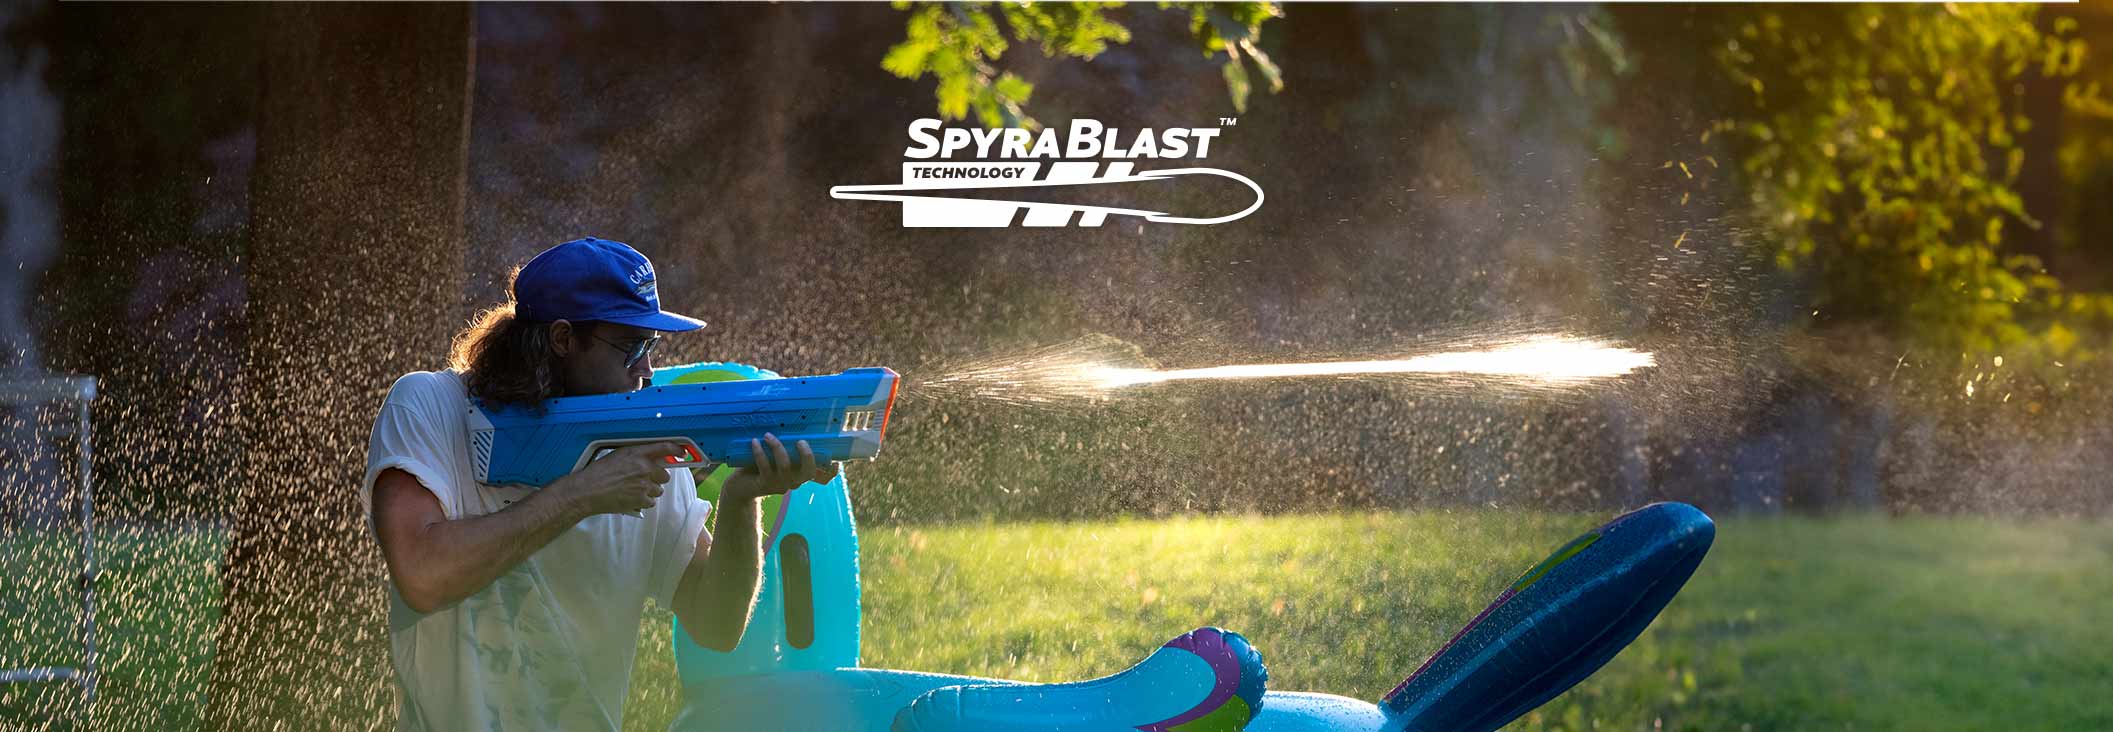 Spyra Two Water Gun Red Worlds Strongest TikTok in Hand for sale online